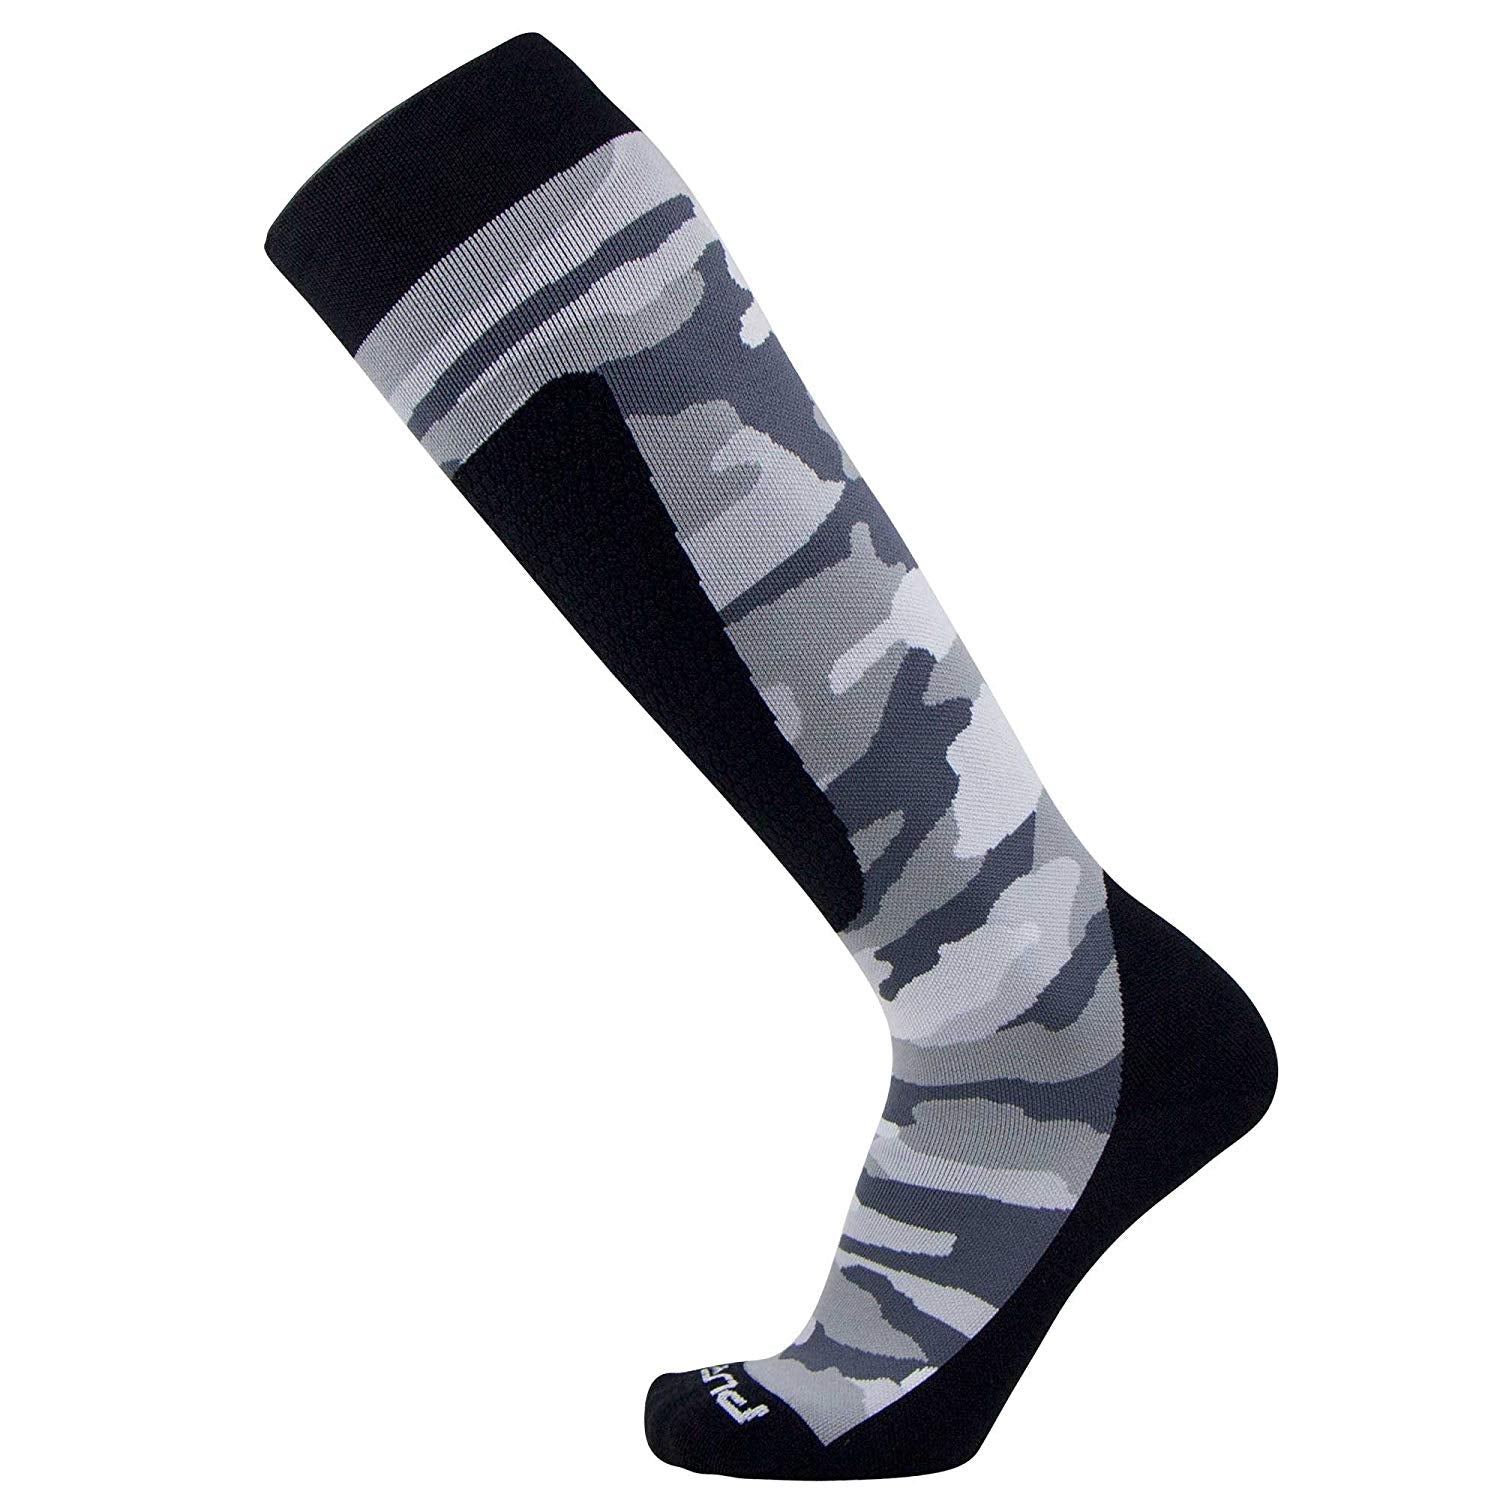 Midweight Camo Snowboard Socks